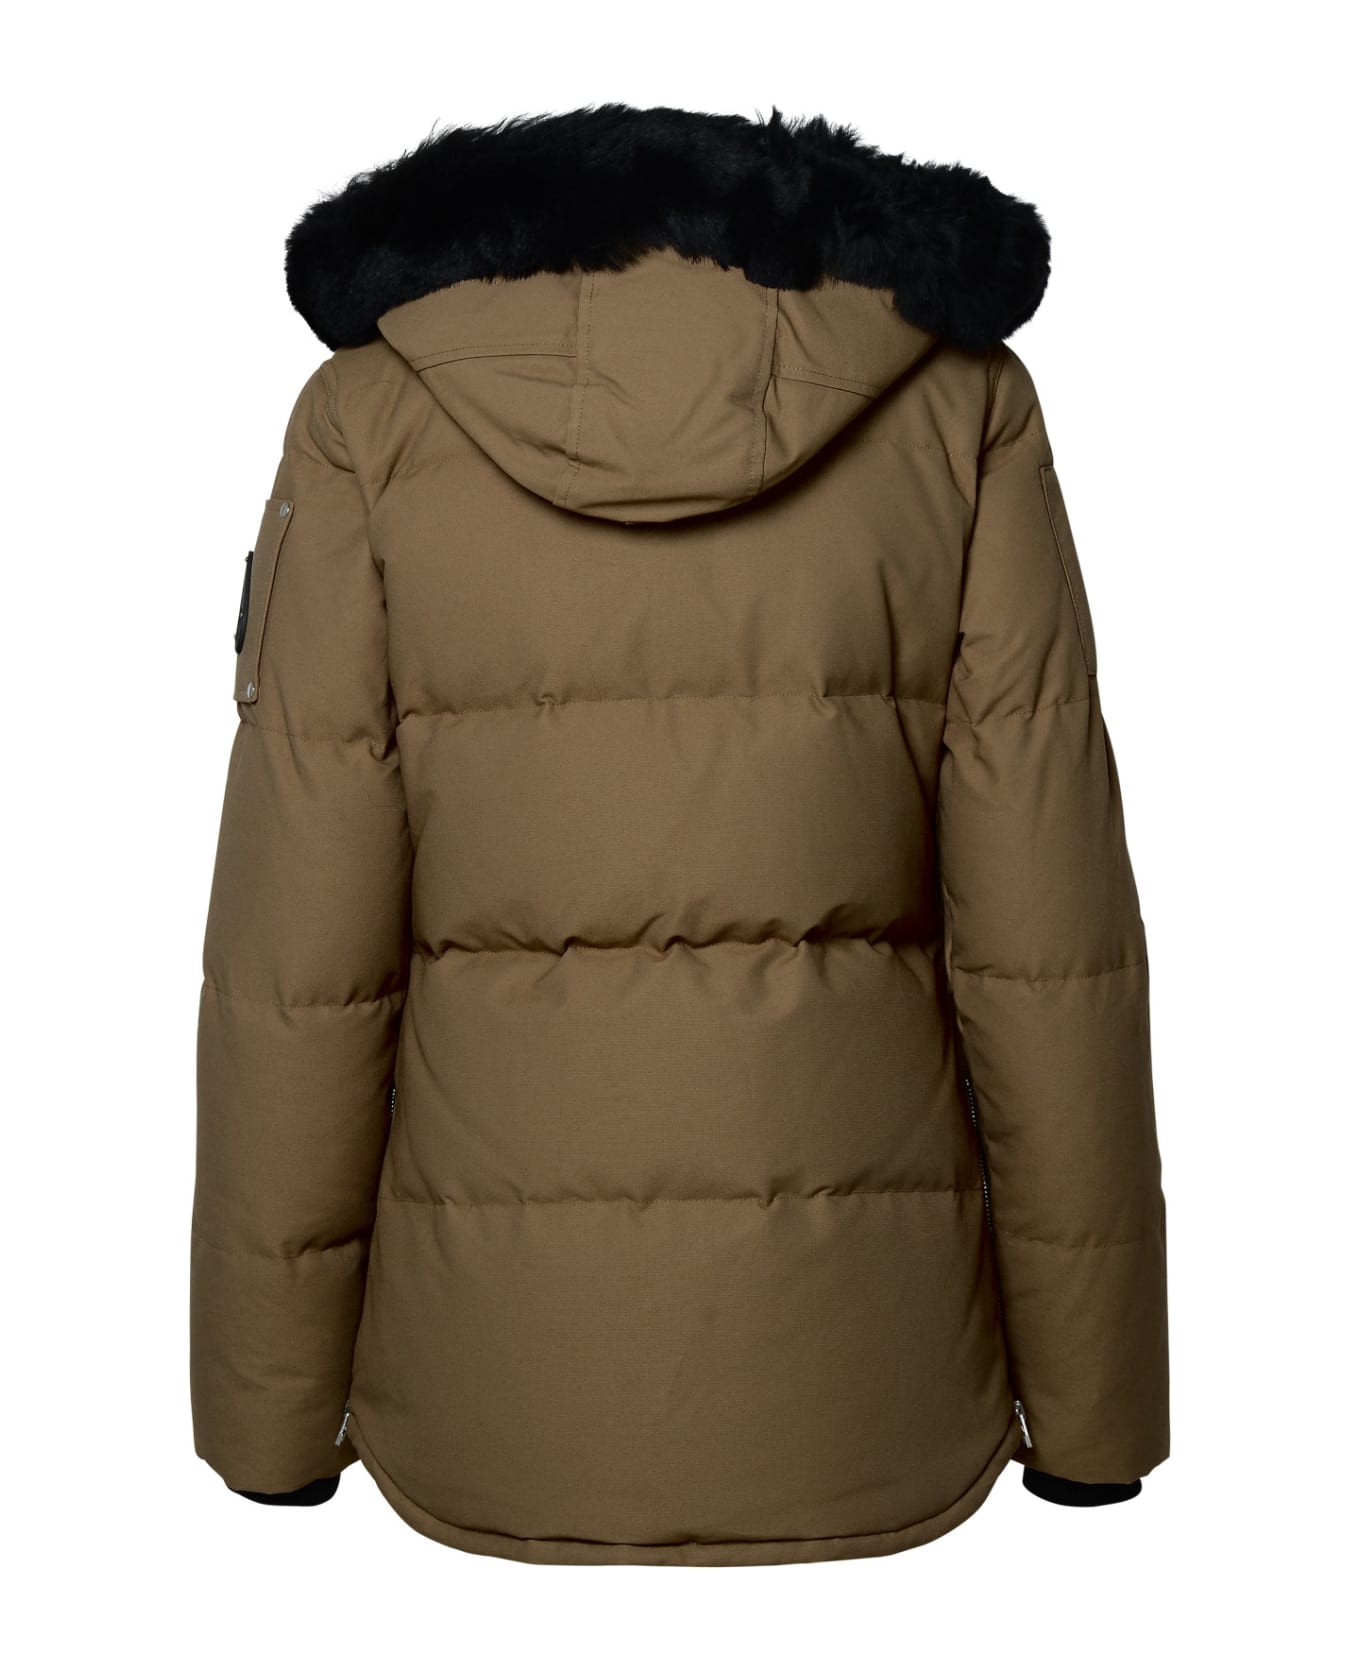 Moose Knuckles 3q Jacket In Brown Cotton Blend - Brown コート